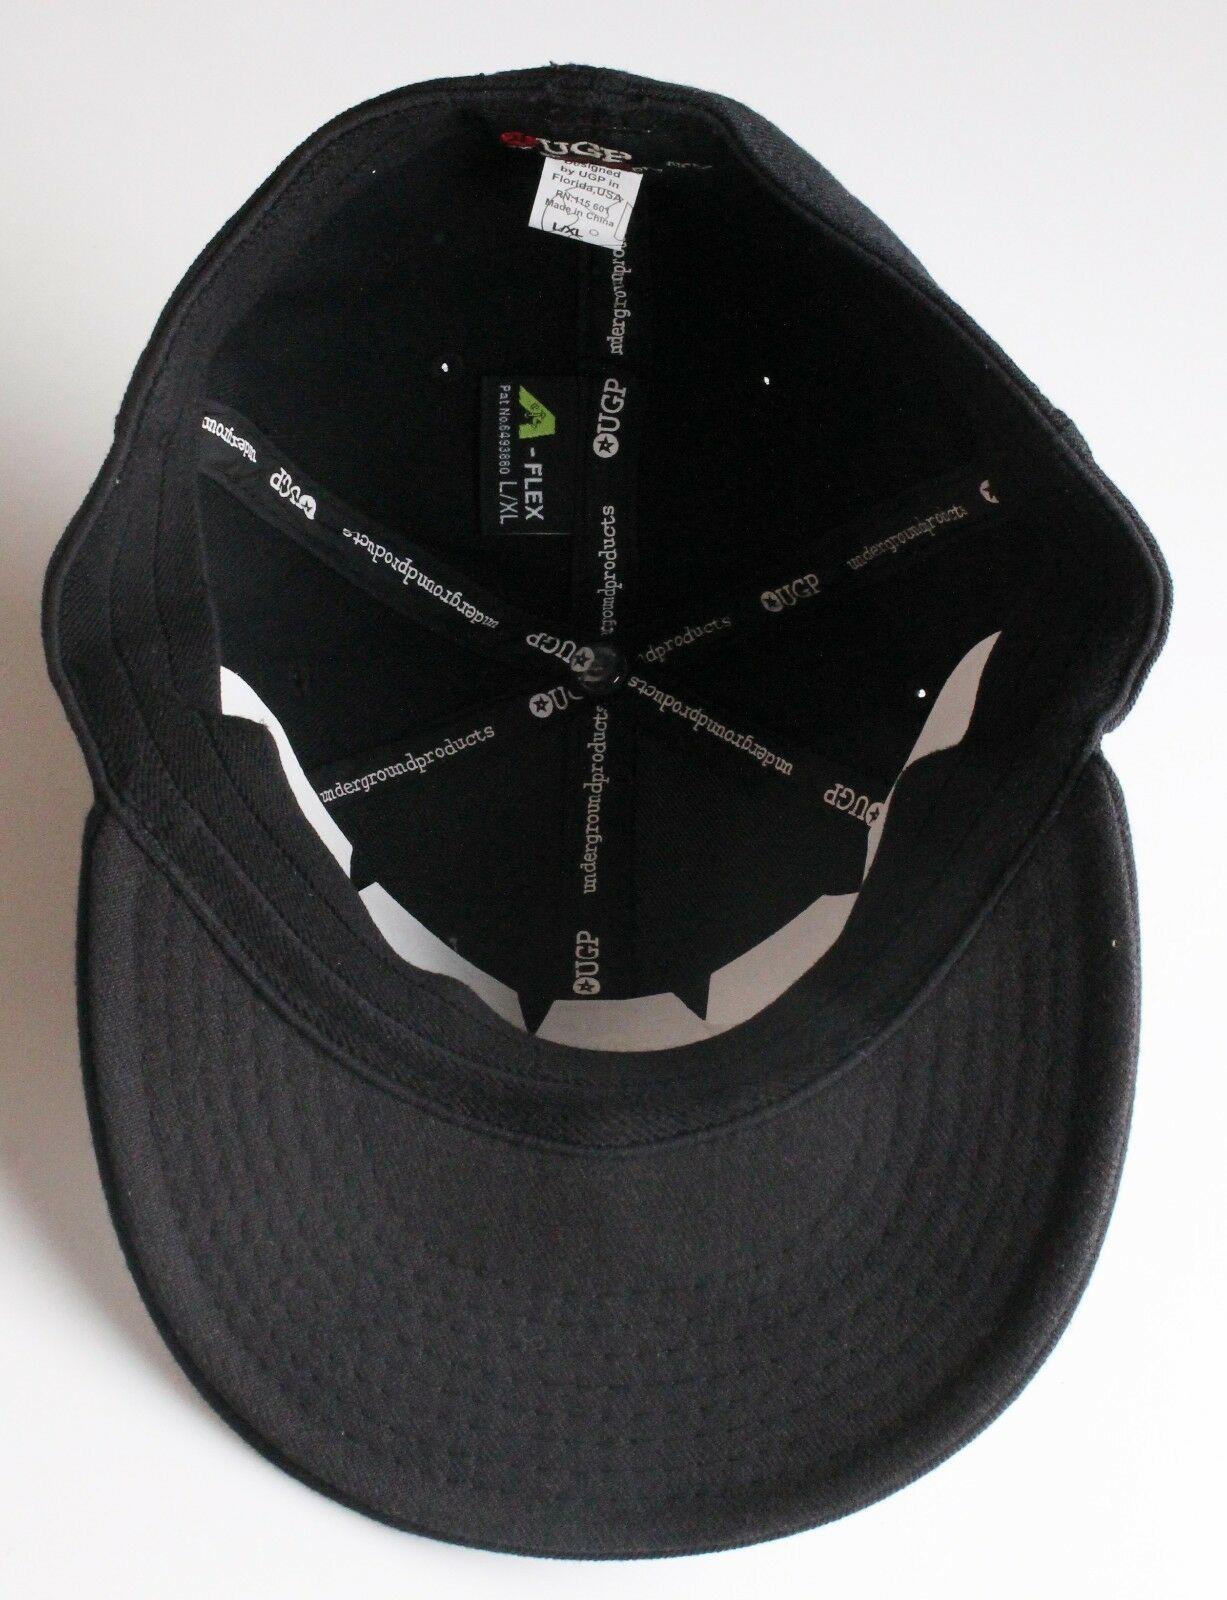 UGP Under Ground Products Black or White Ninja Shuriken FlexFit Baseball Hat NWT 